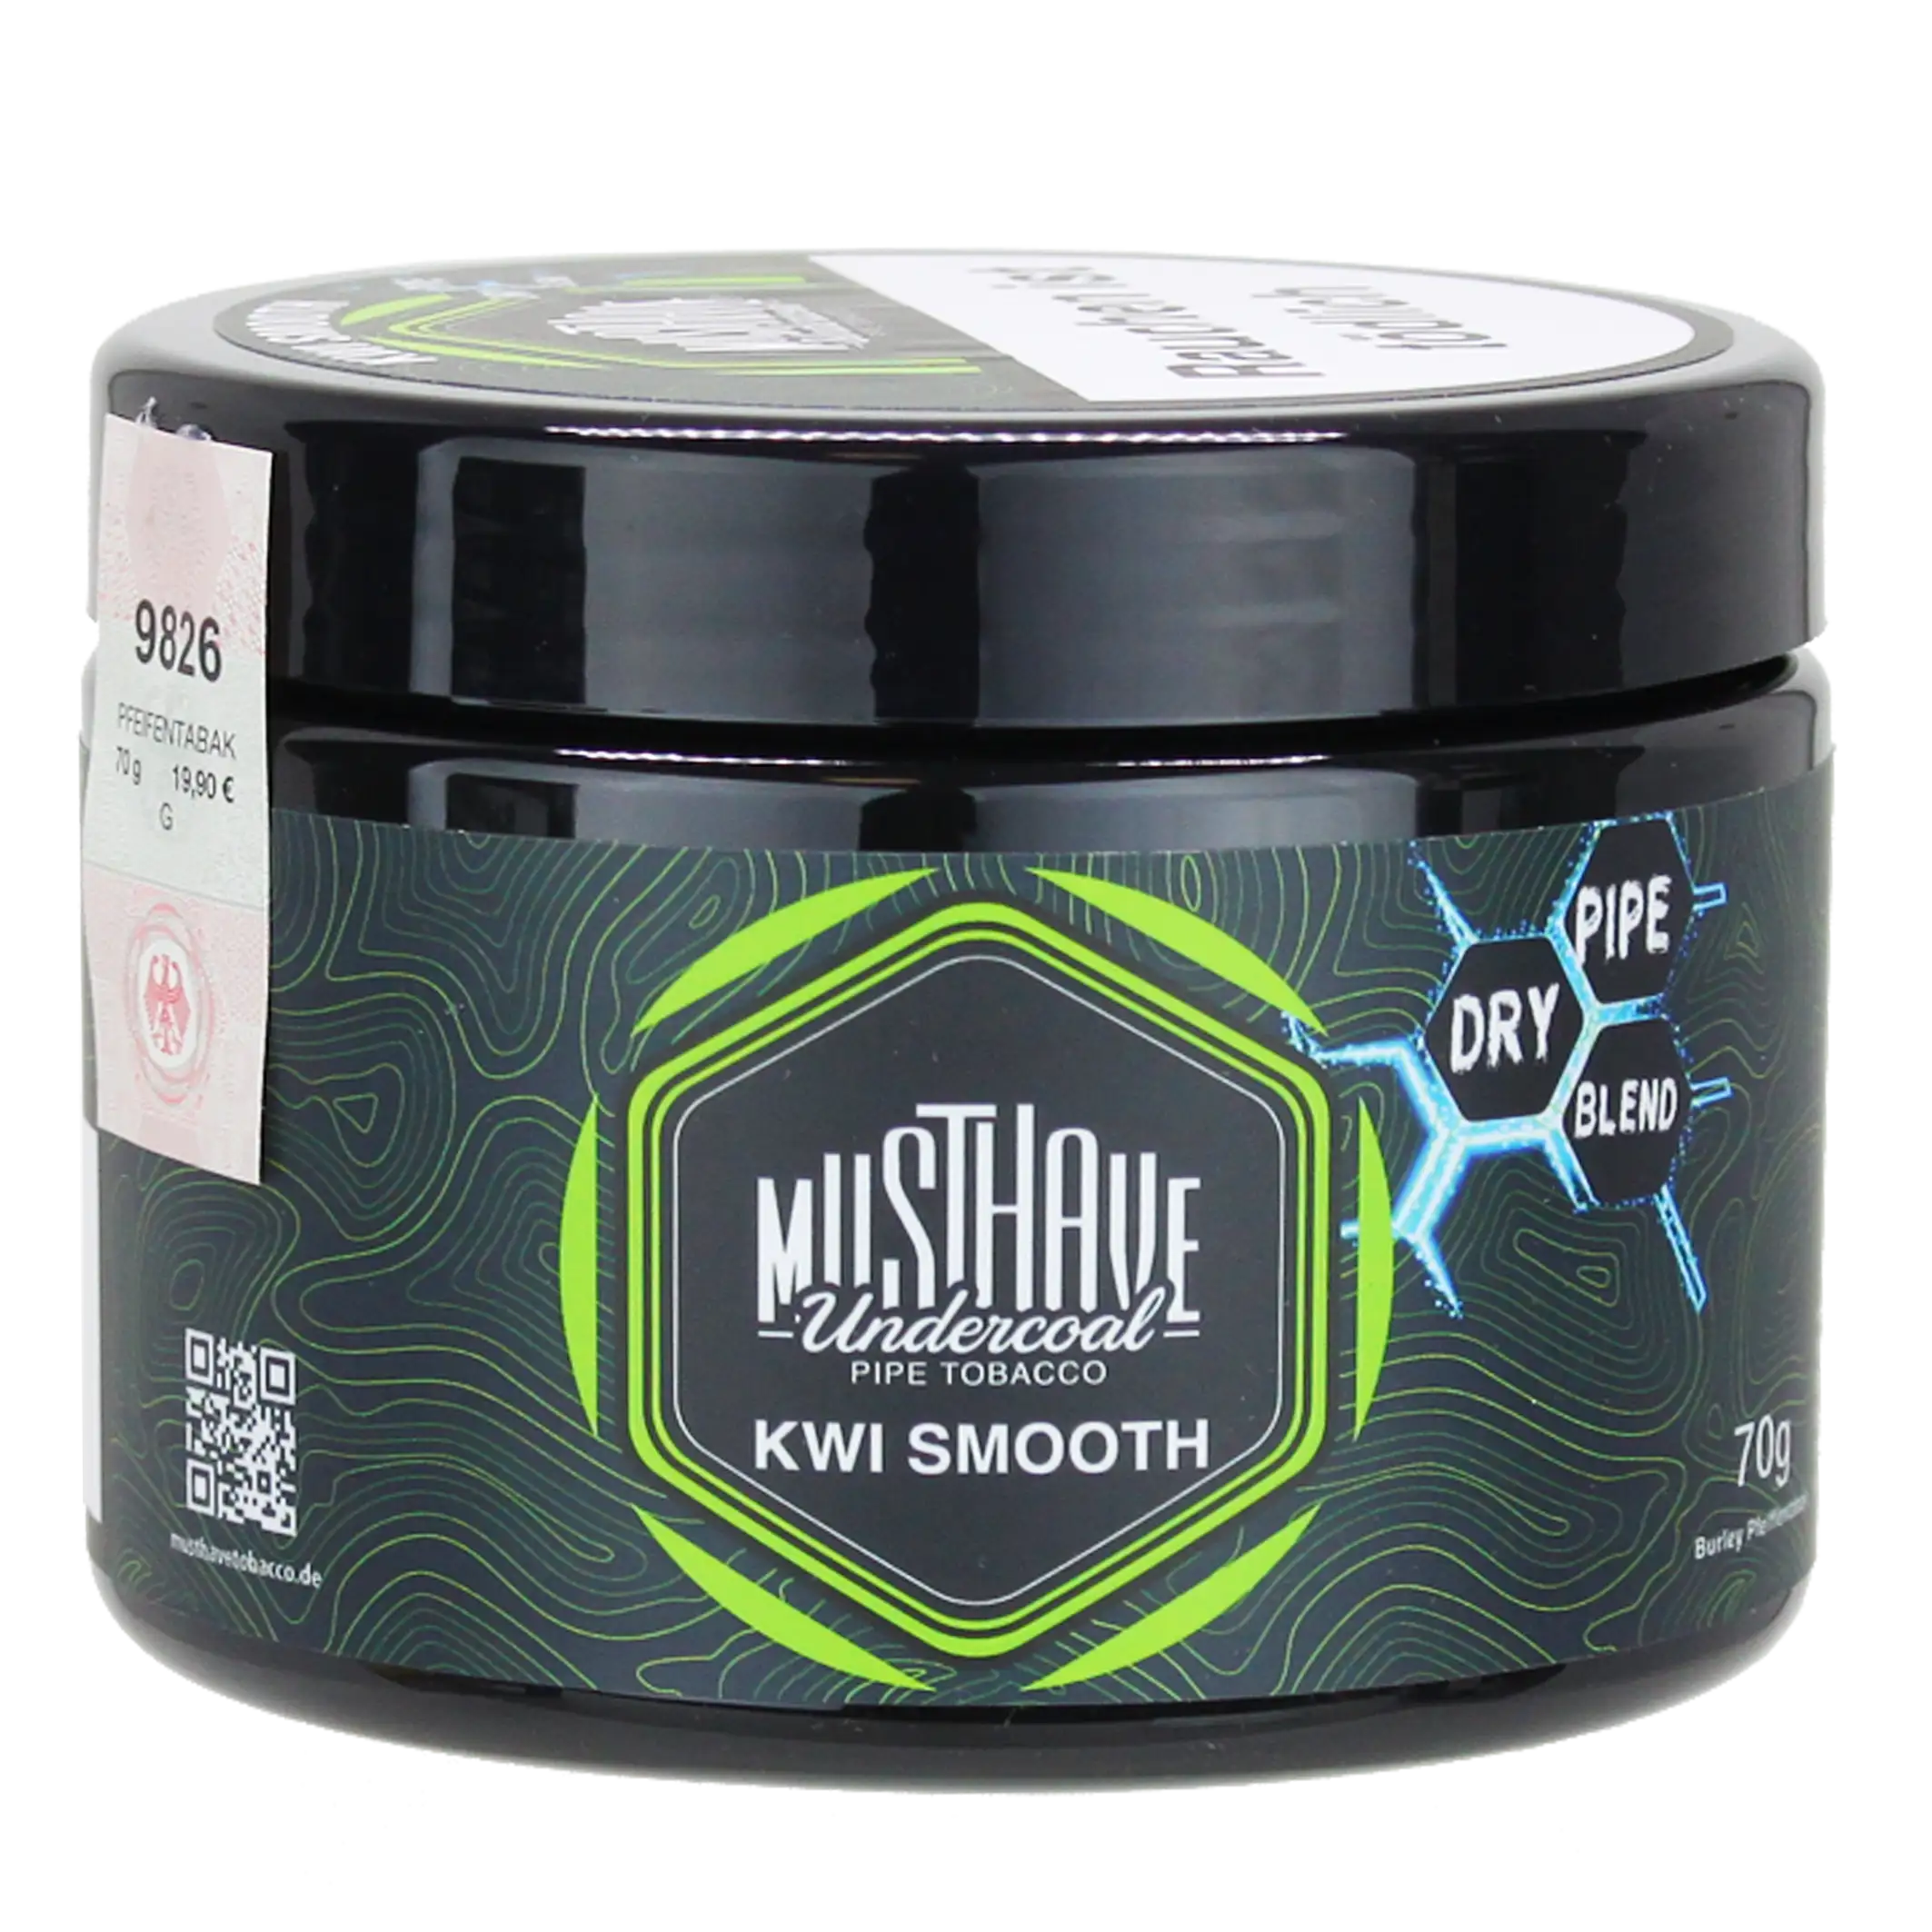 Musthave Dry Base Tabak Kiwi Smooth 70g